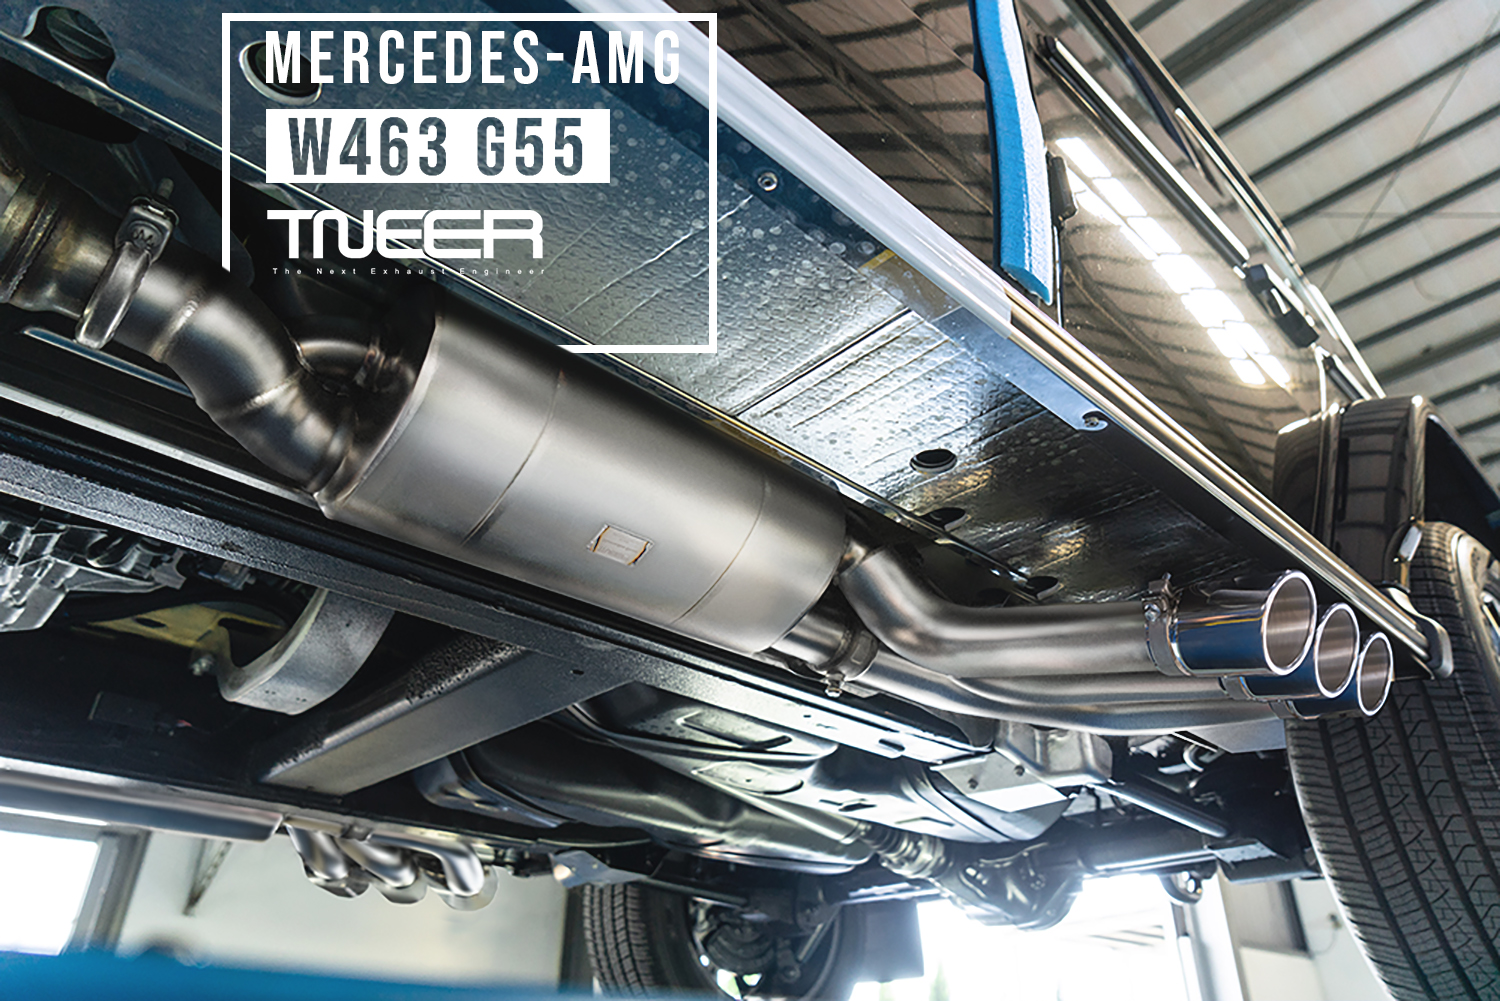 Mercedes-AMG W463 G55 (M113) TNEER High-Performance Downpipes